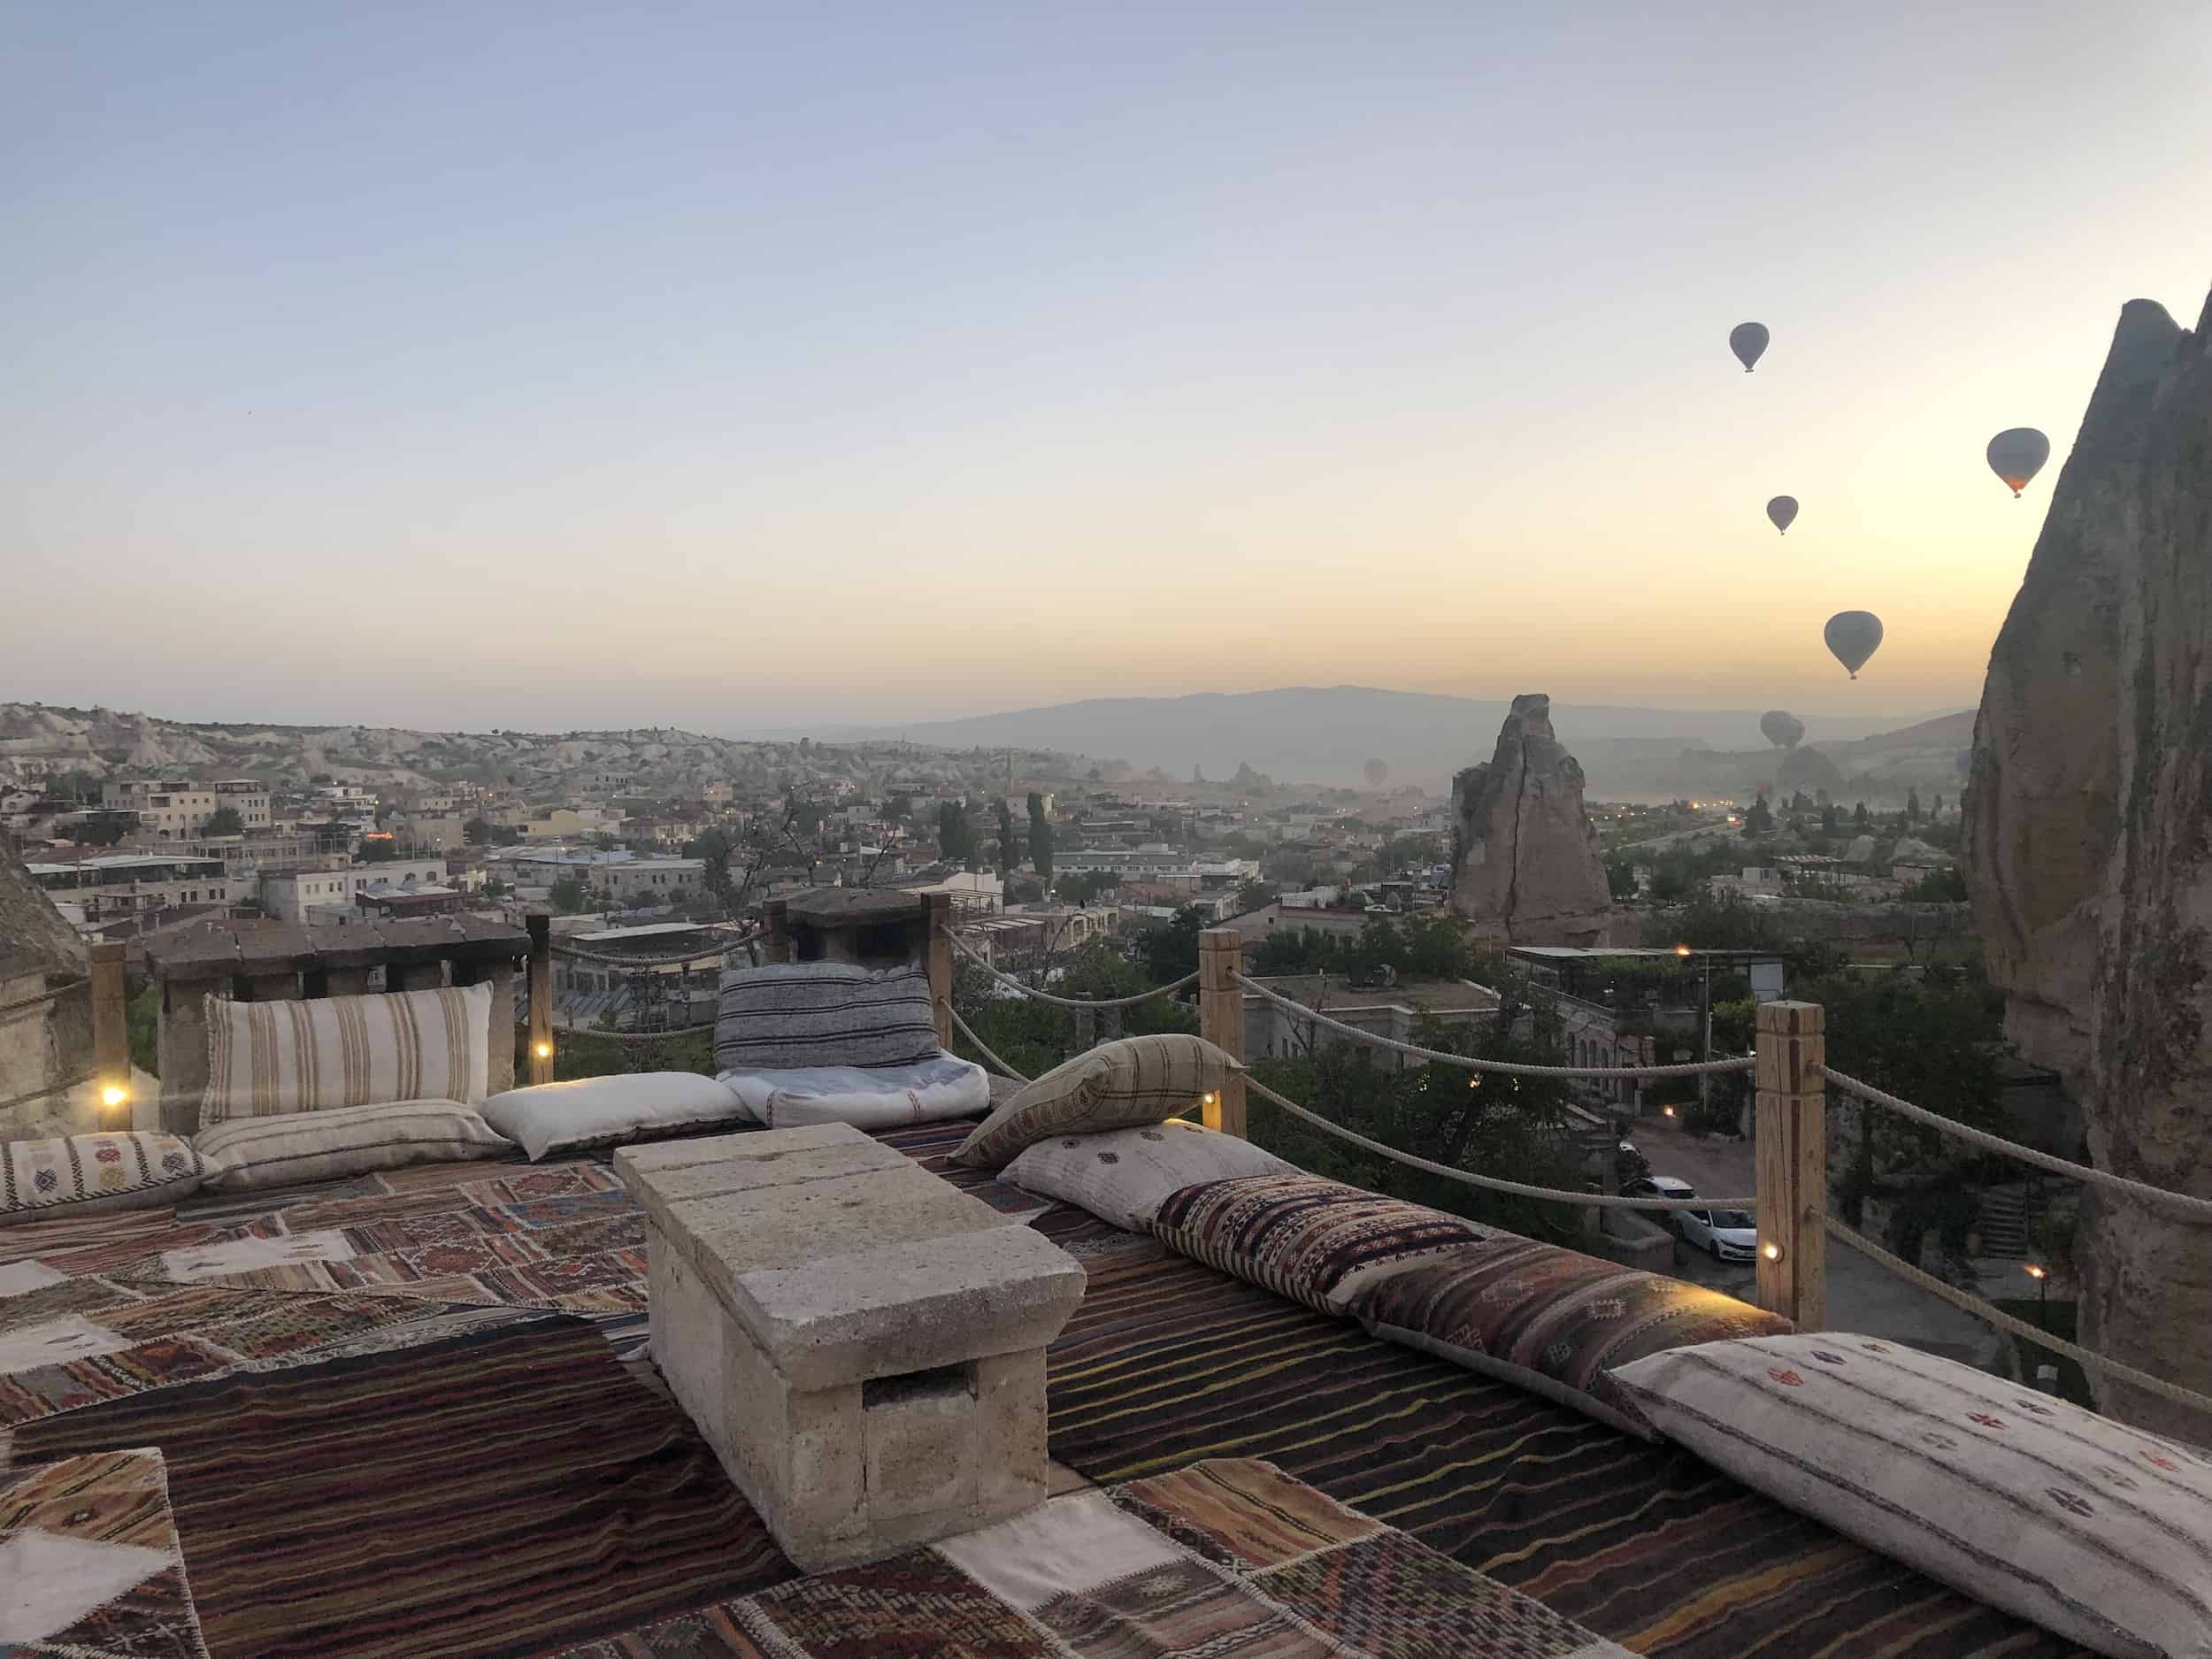 Balloon viewing platform at Anatolian Houses in Göreme, Cappadocia, Turkey